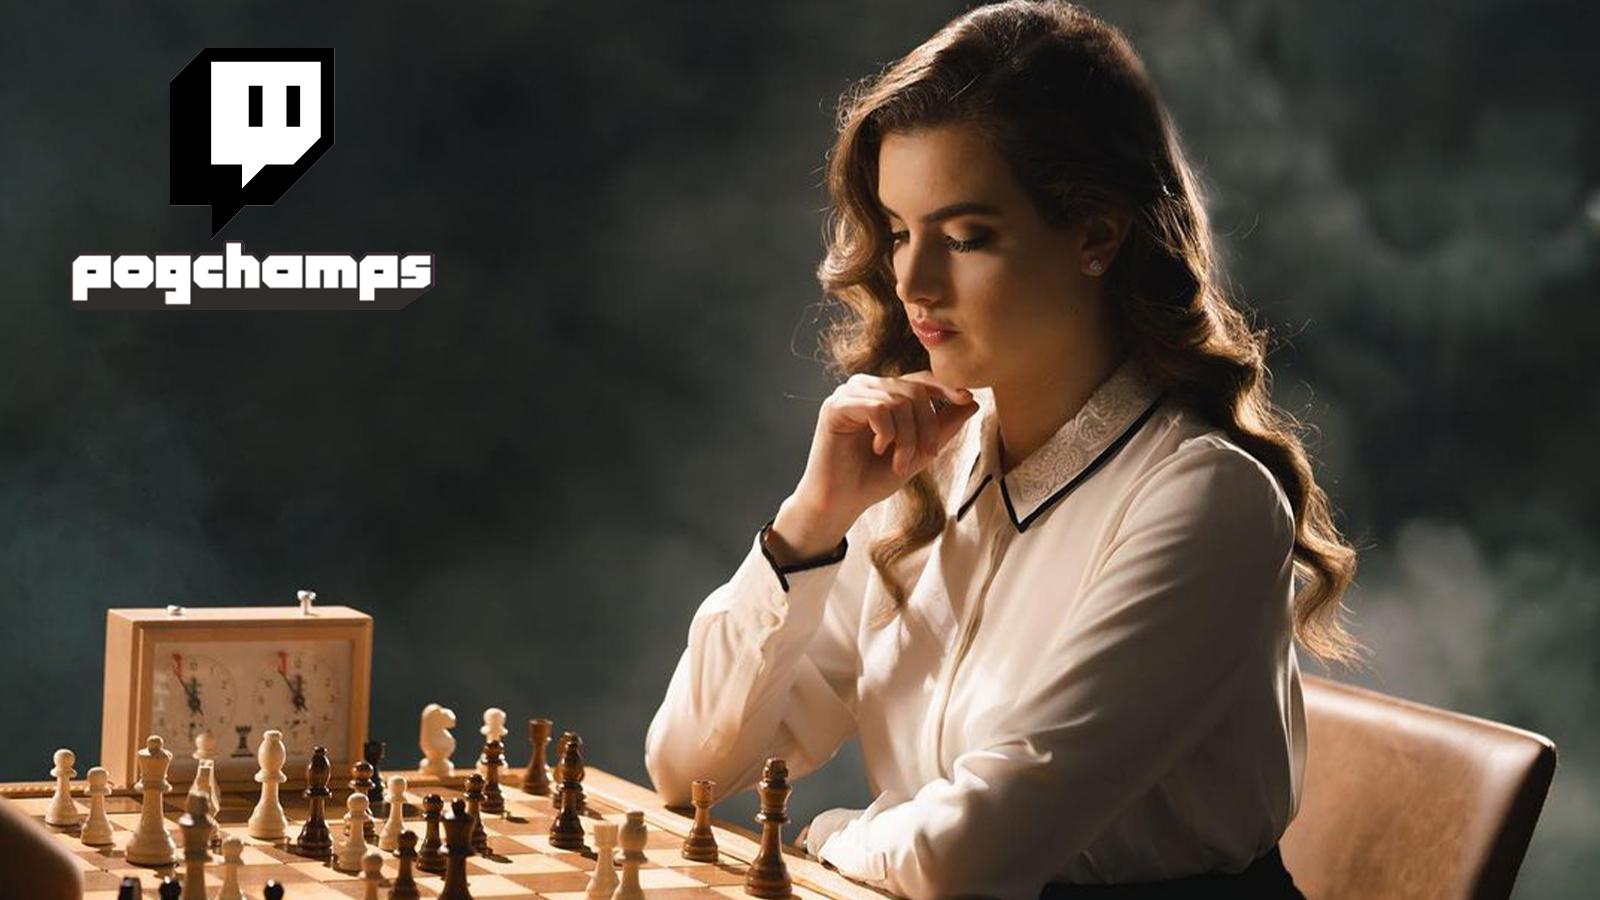 Alexandra Botez Pogchamps Twitch Chess Grandmaster